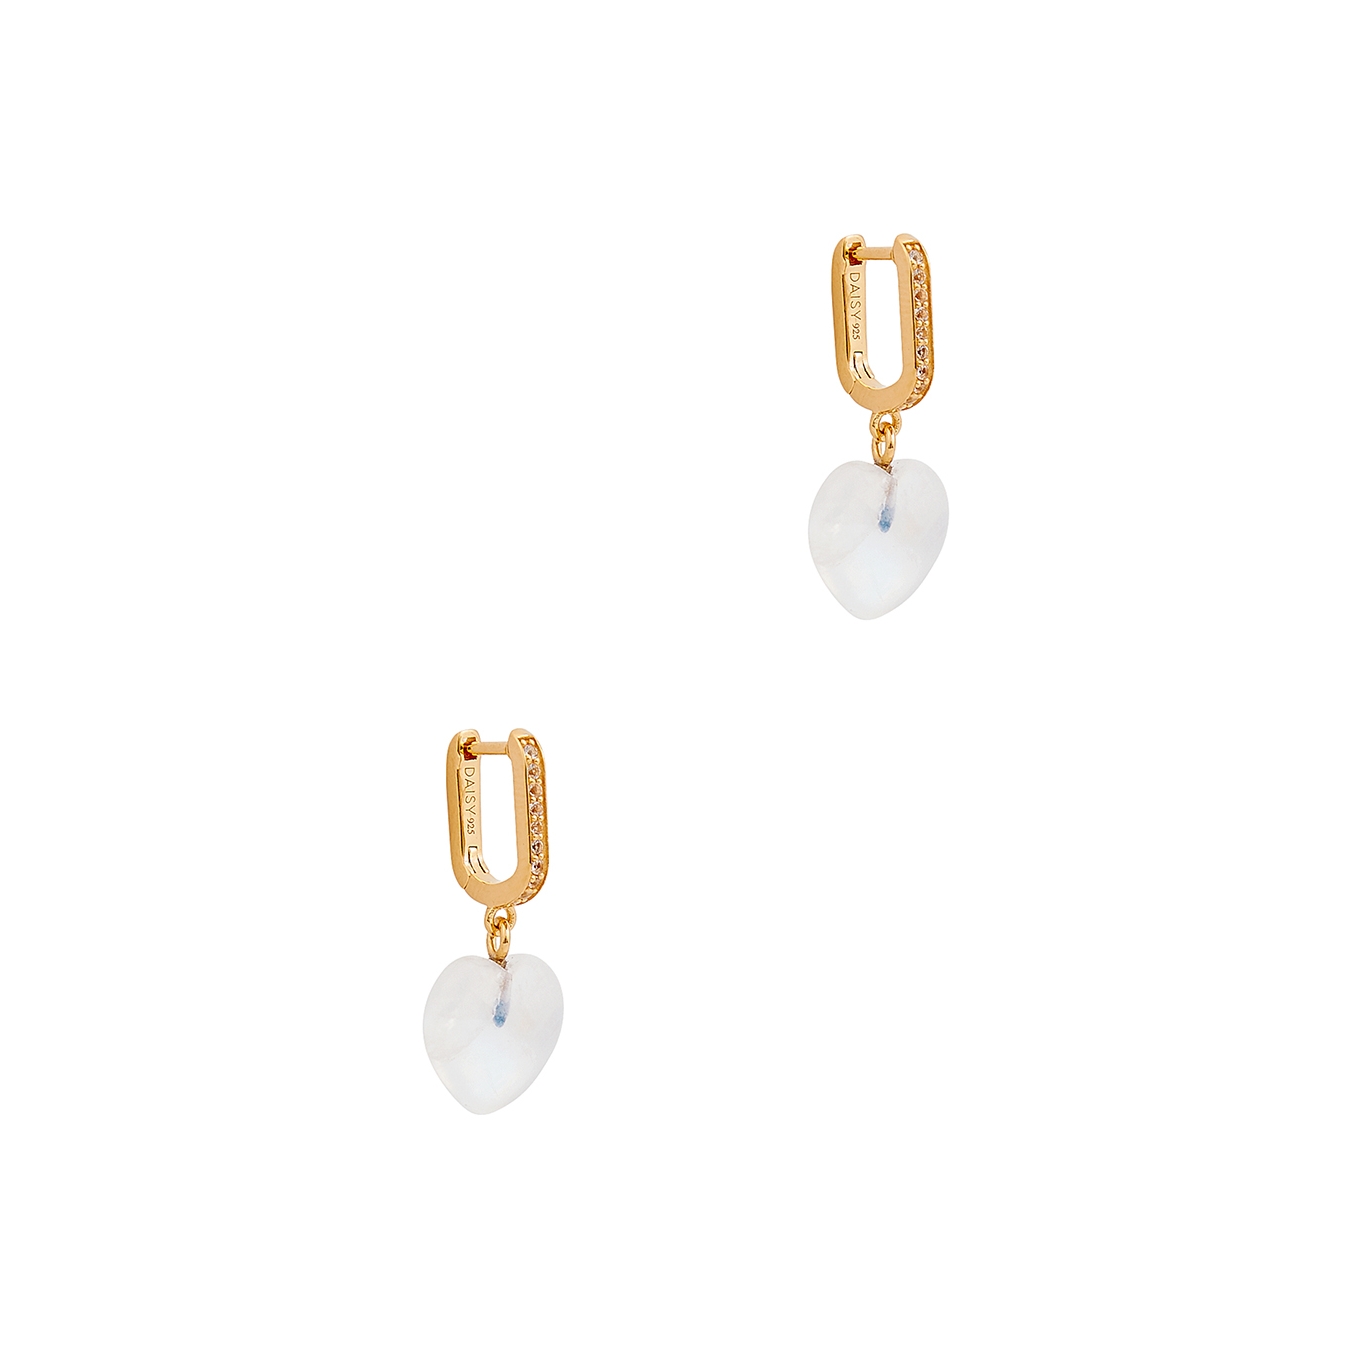 Daisy London Beloved Moonstone Heart 18kt Gold-plated Drop Earrings - One Size